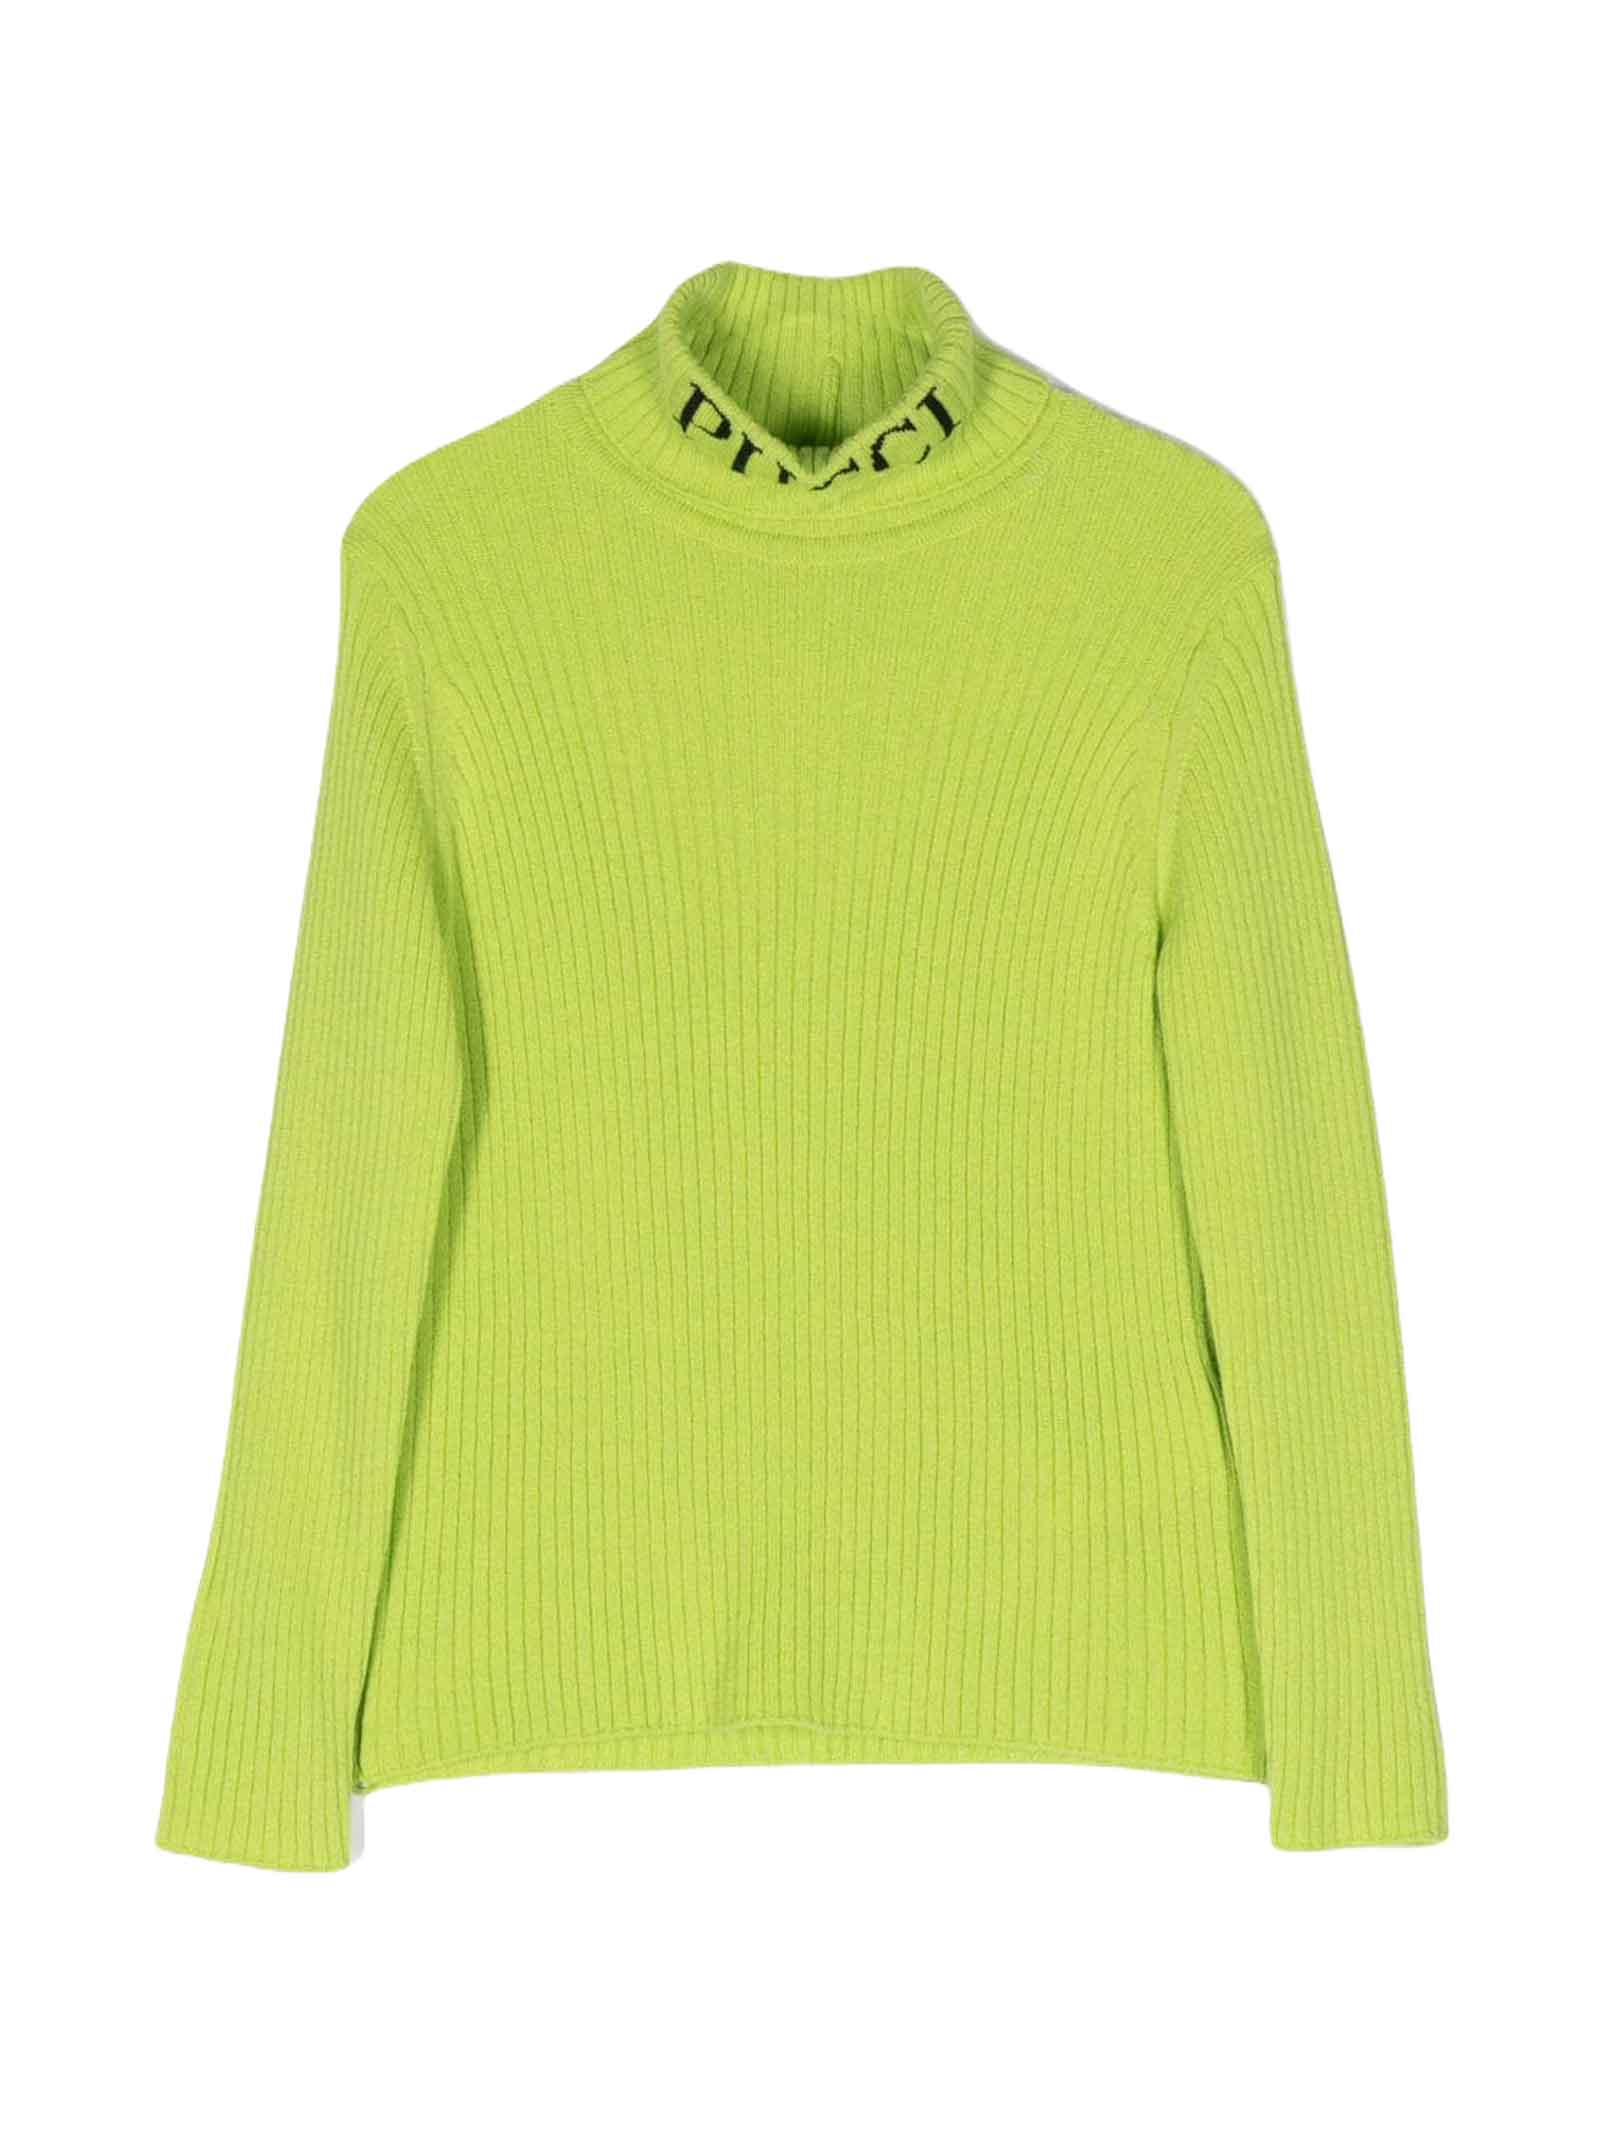 Pucci Kids' Lime Sweater Girl